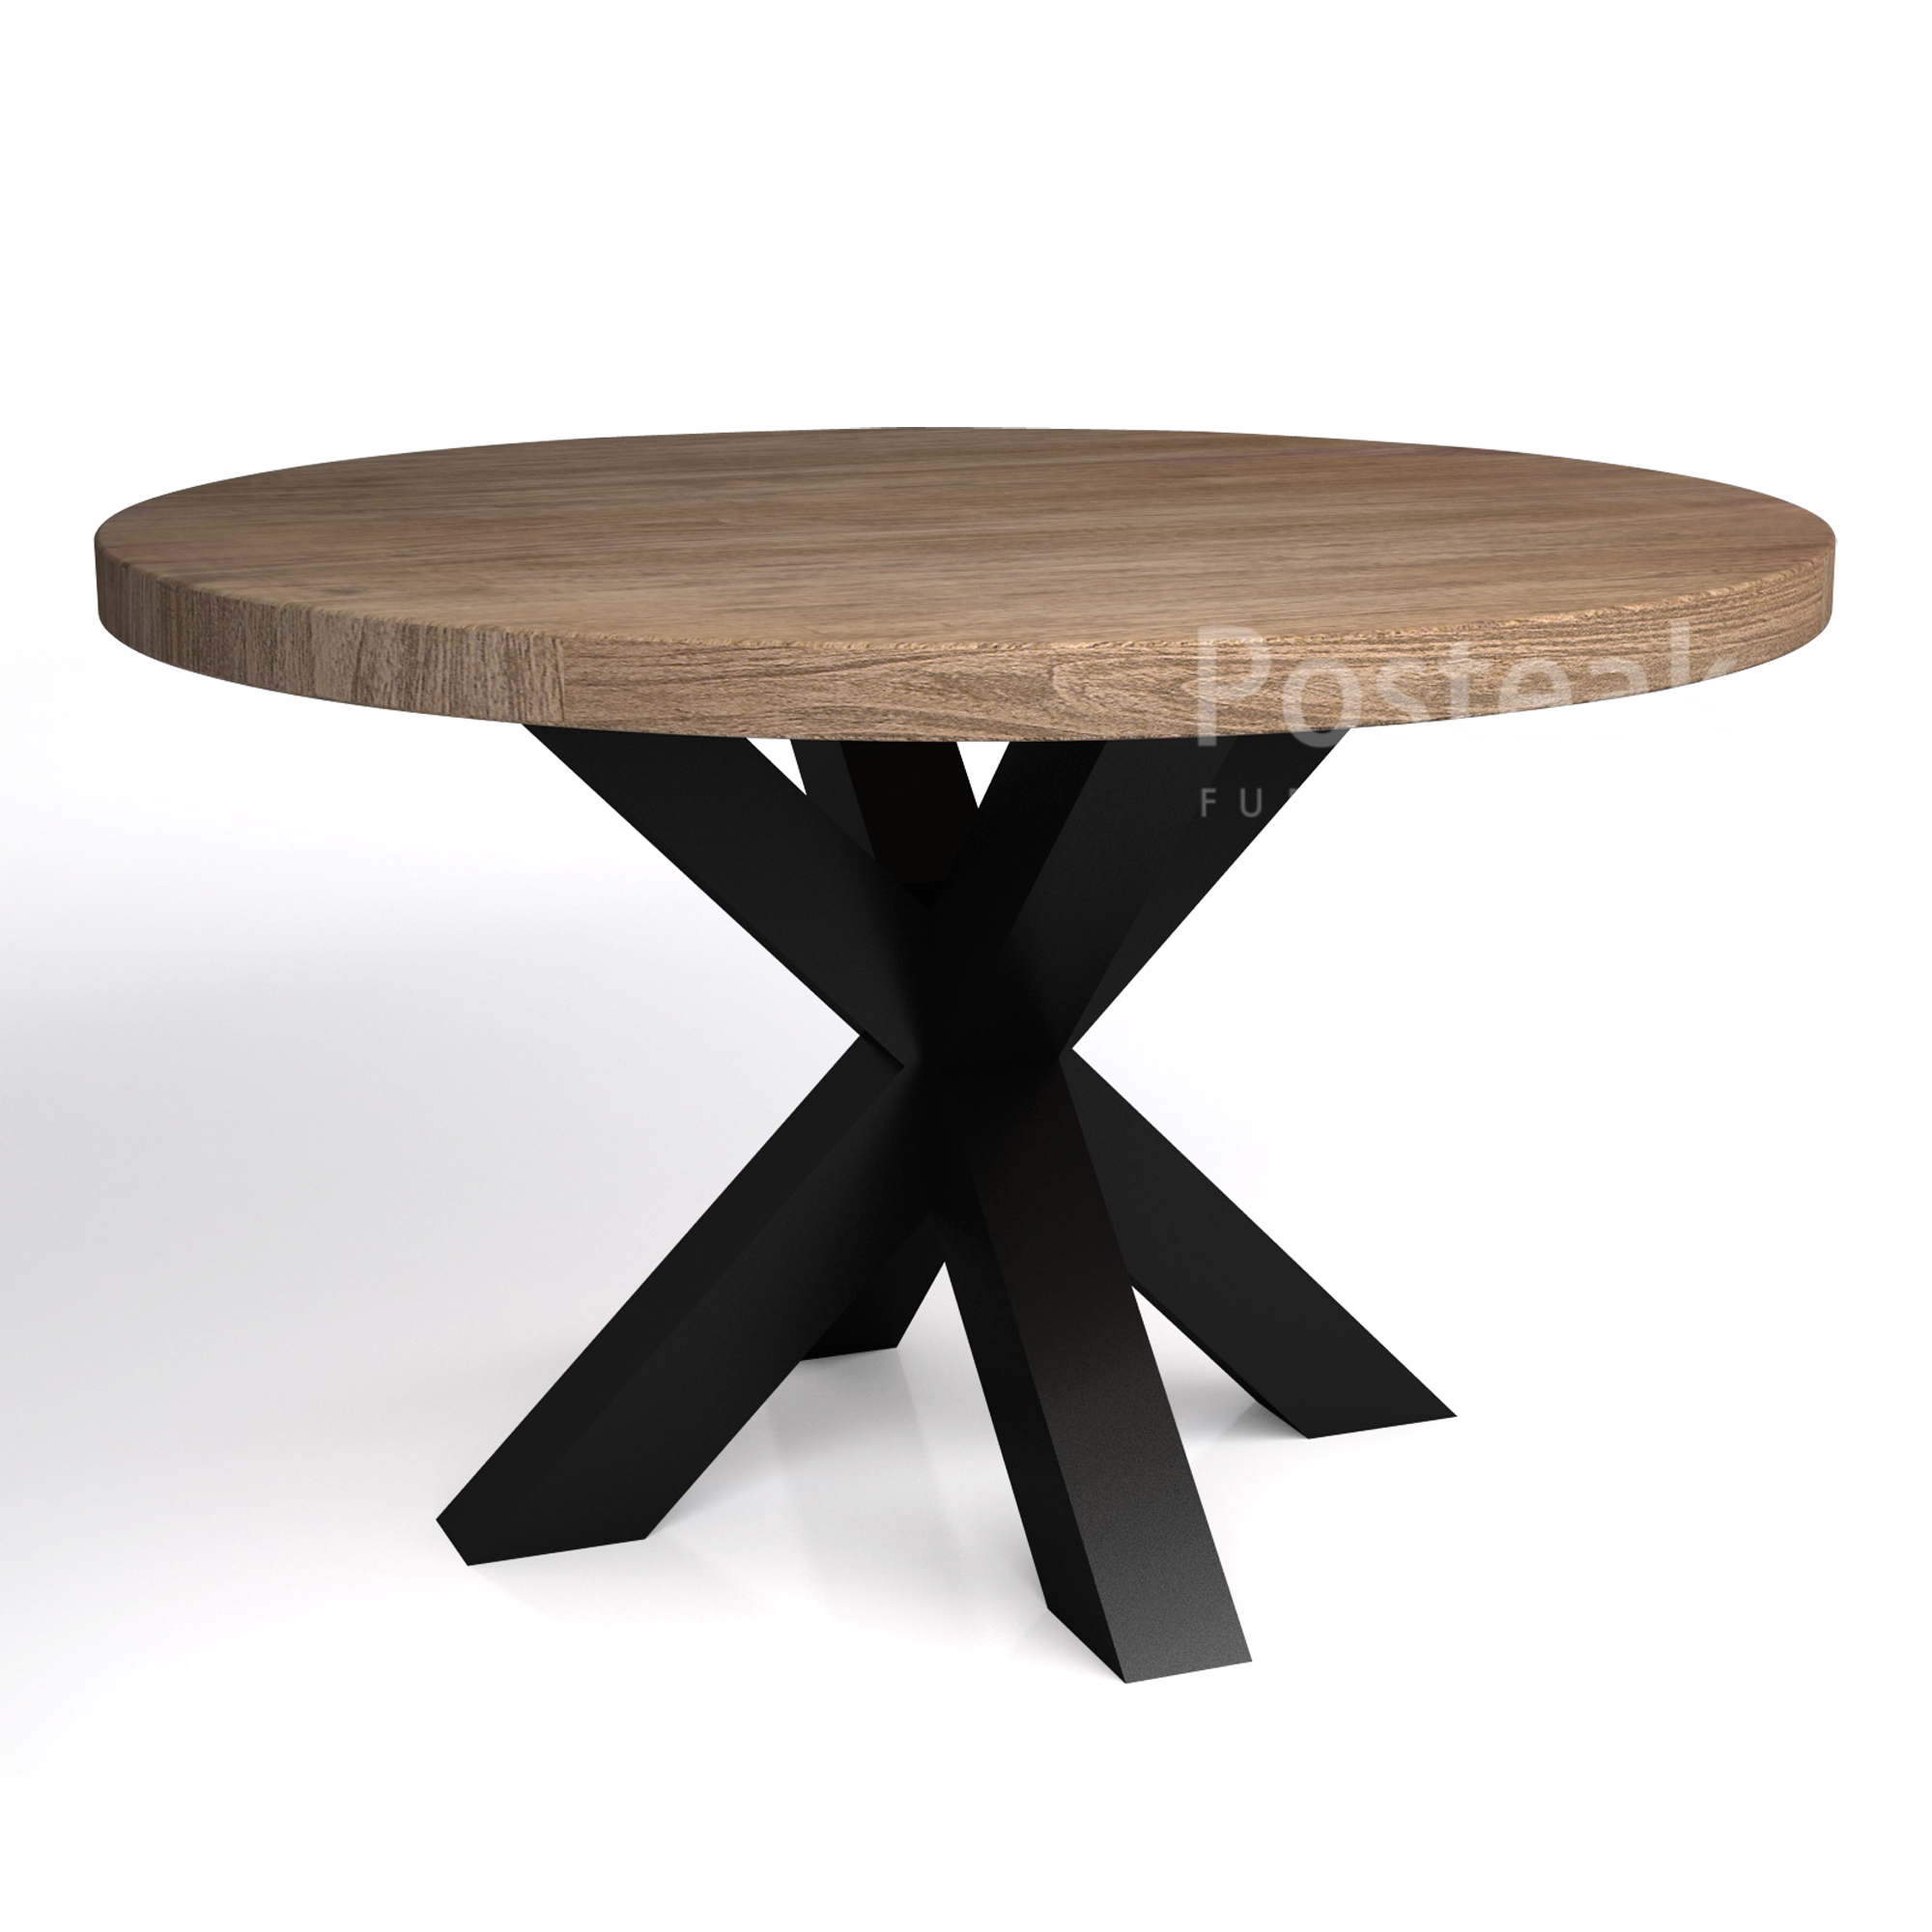 Round Modern Dining Table - Iron Cross Legs | Posteak Furniture